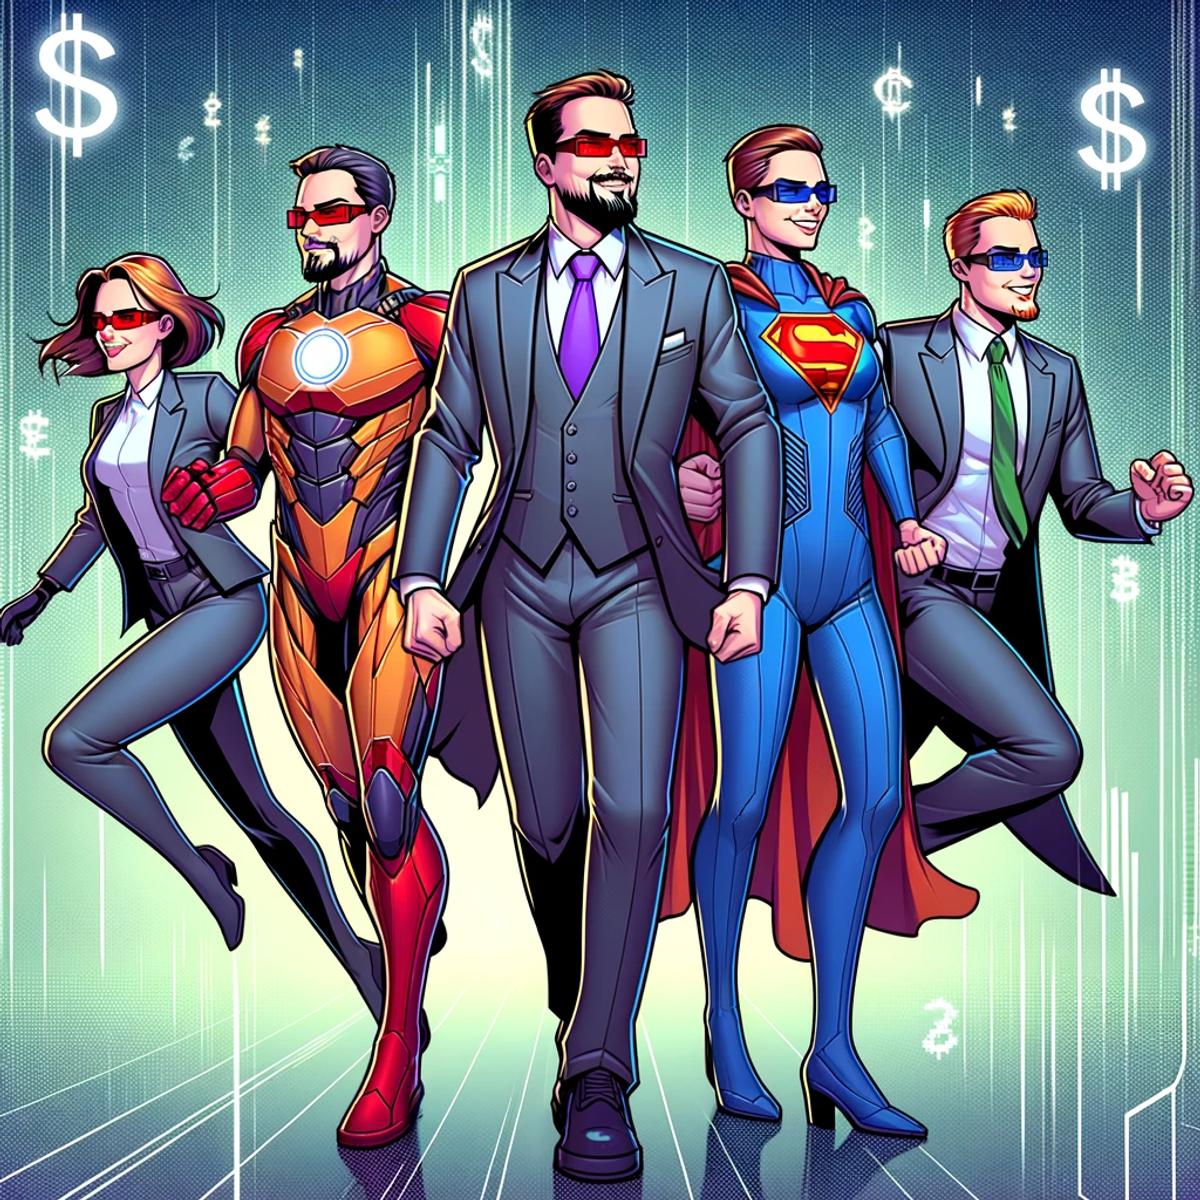 AI generated image of tax super hero team